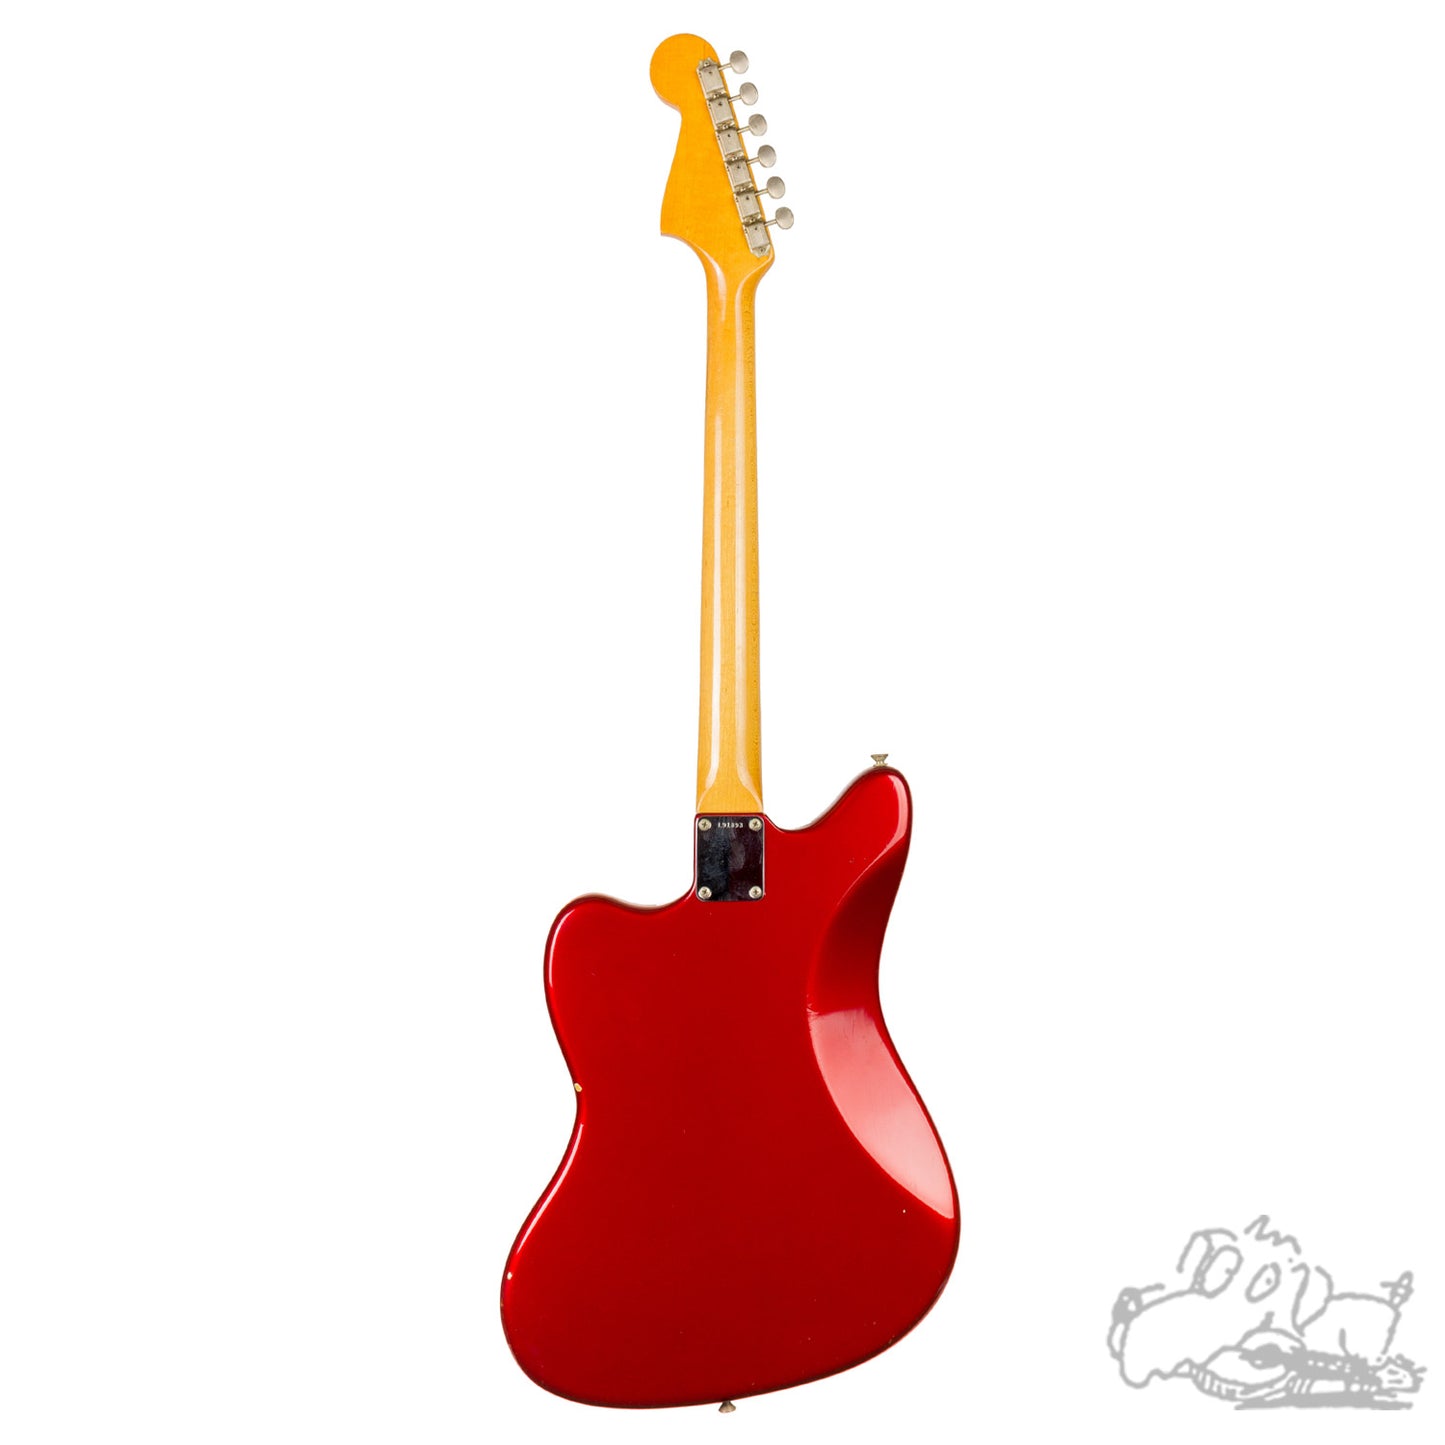 1965 Fender Jazzmaster - Candy Apple Red